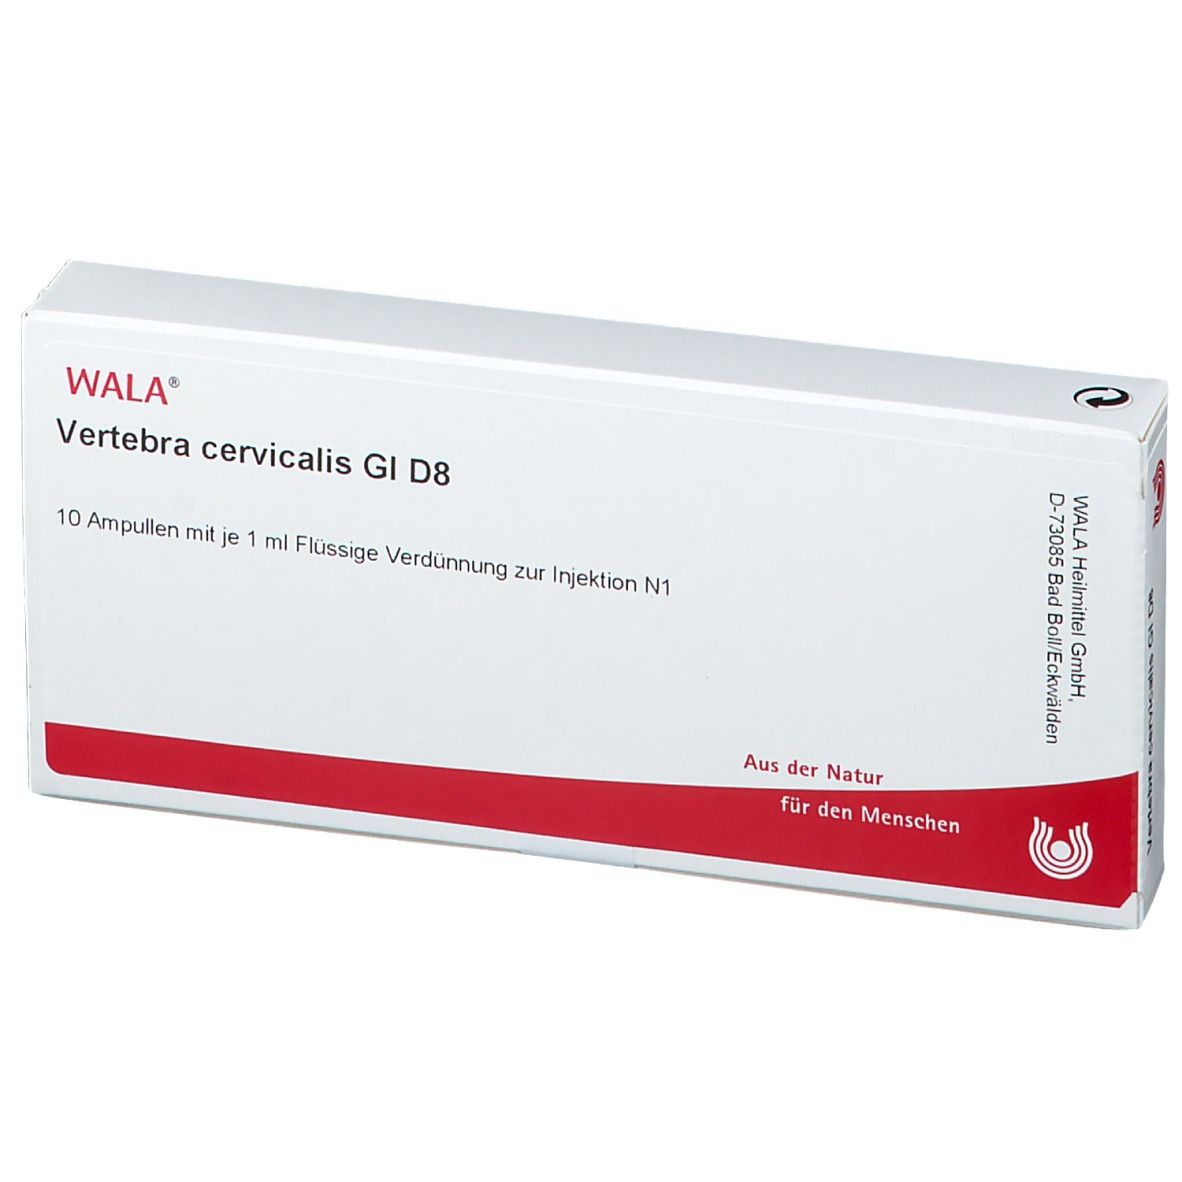 WALA® Vertebra cervicalis Gl D 8